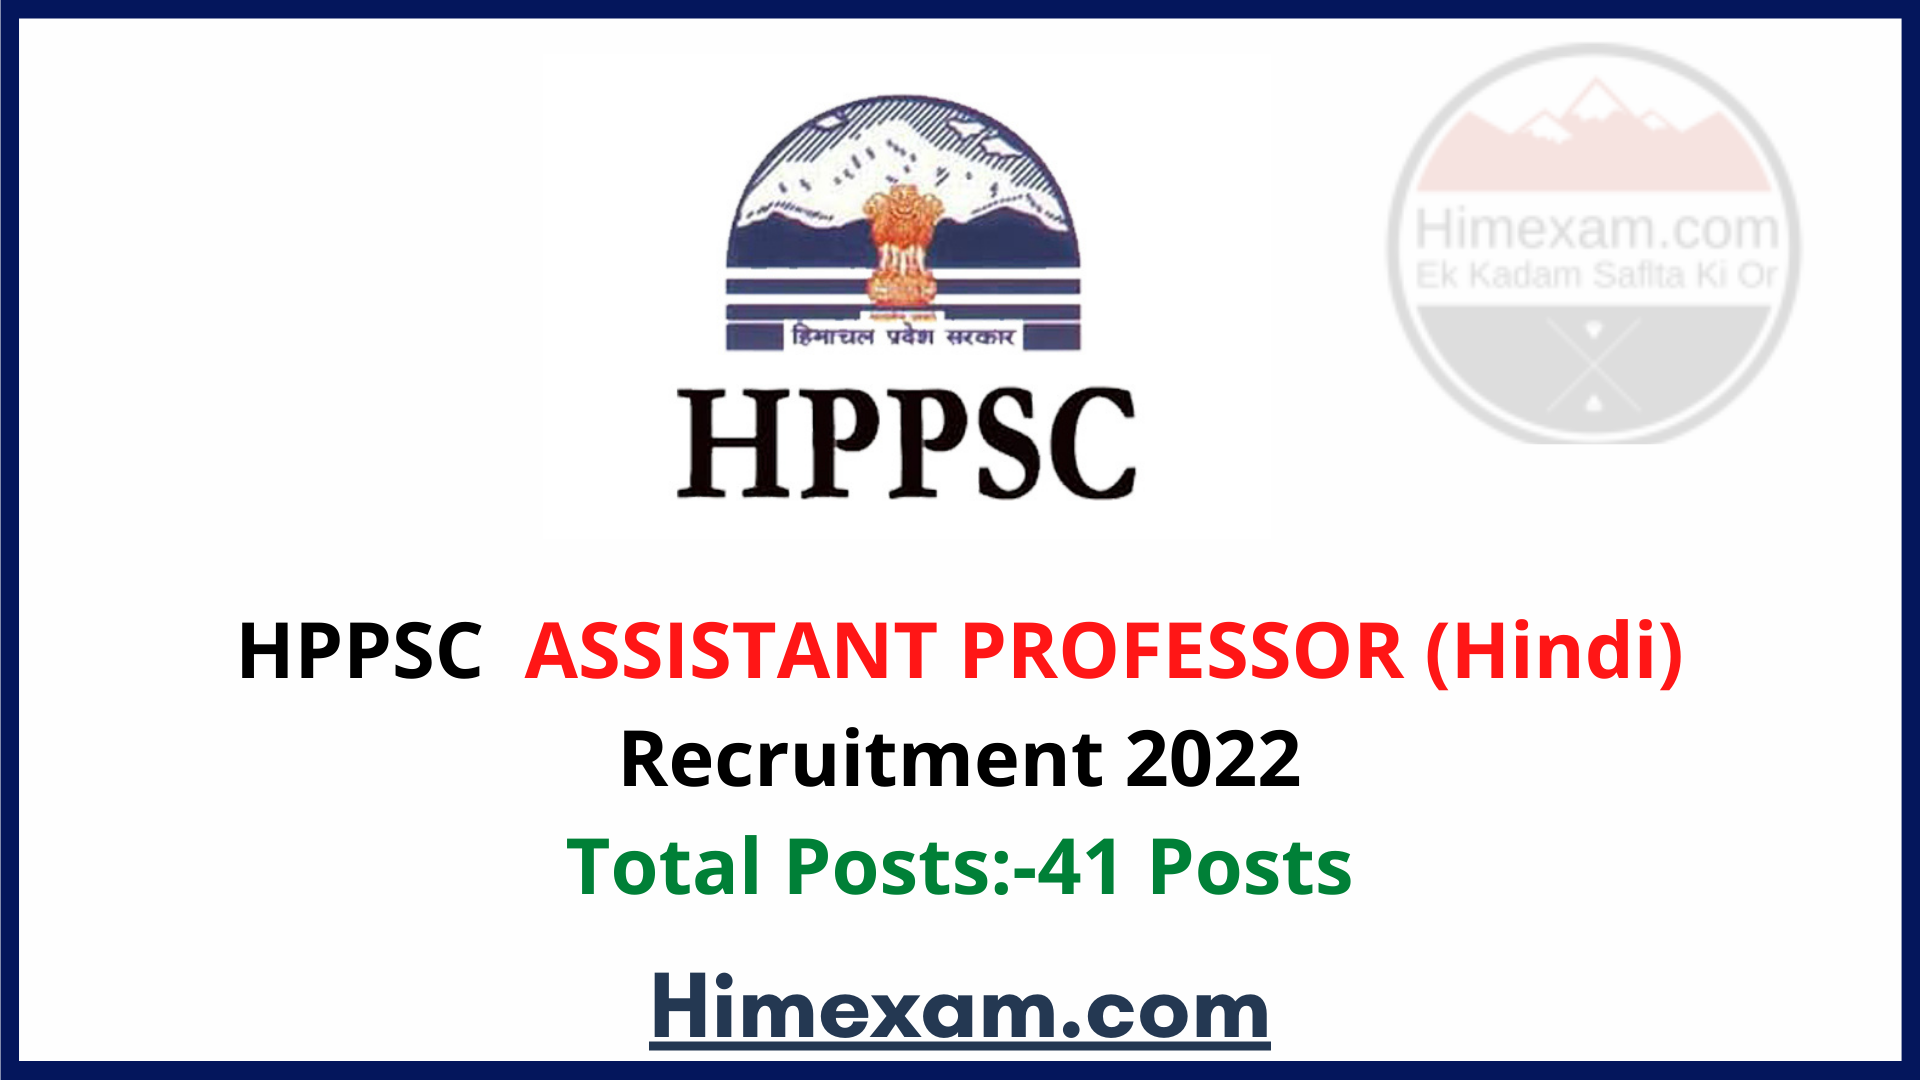 HPPSC ASSISTANT PROFESSOR (Hindi) Recruitment 202